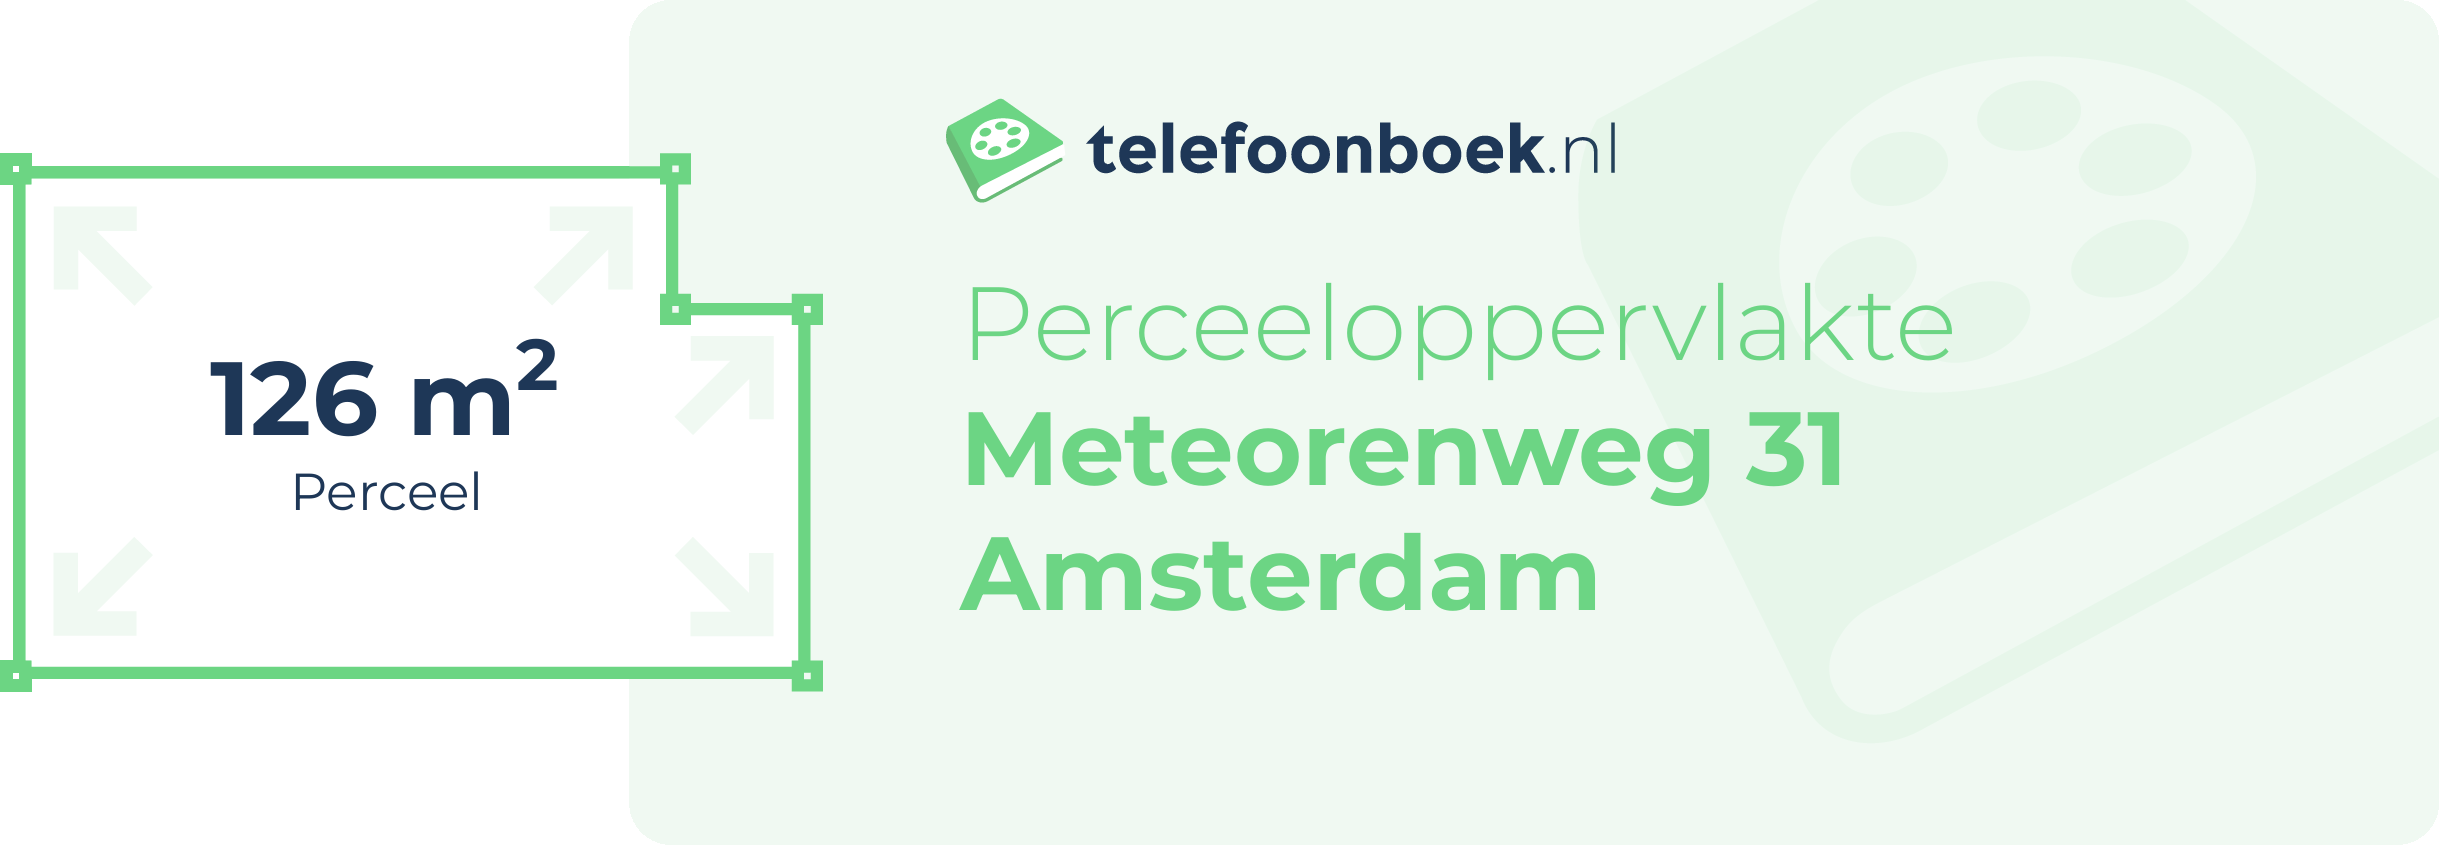 Perceeloppervlakte Meteorenweg 31 Amsterdam